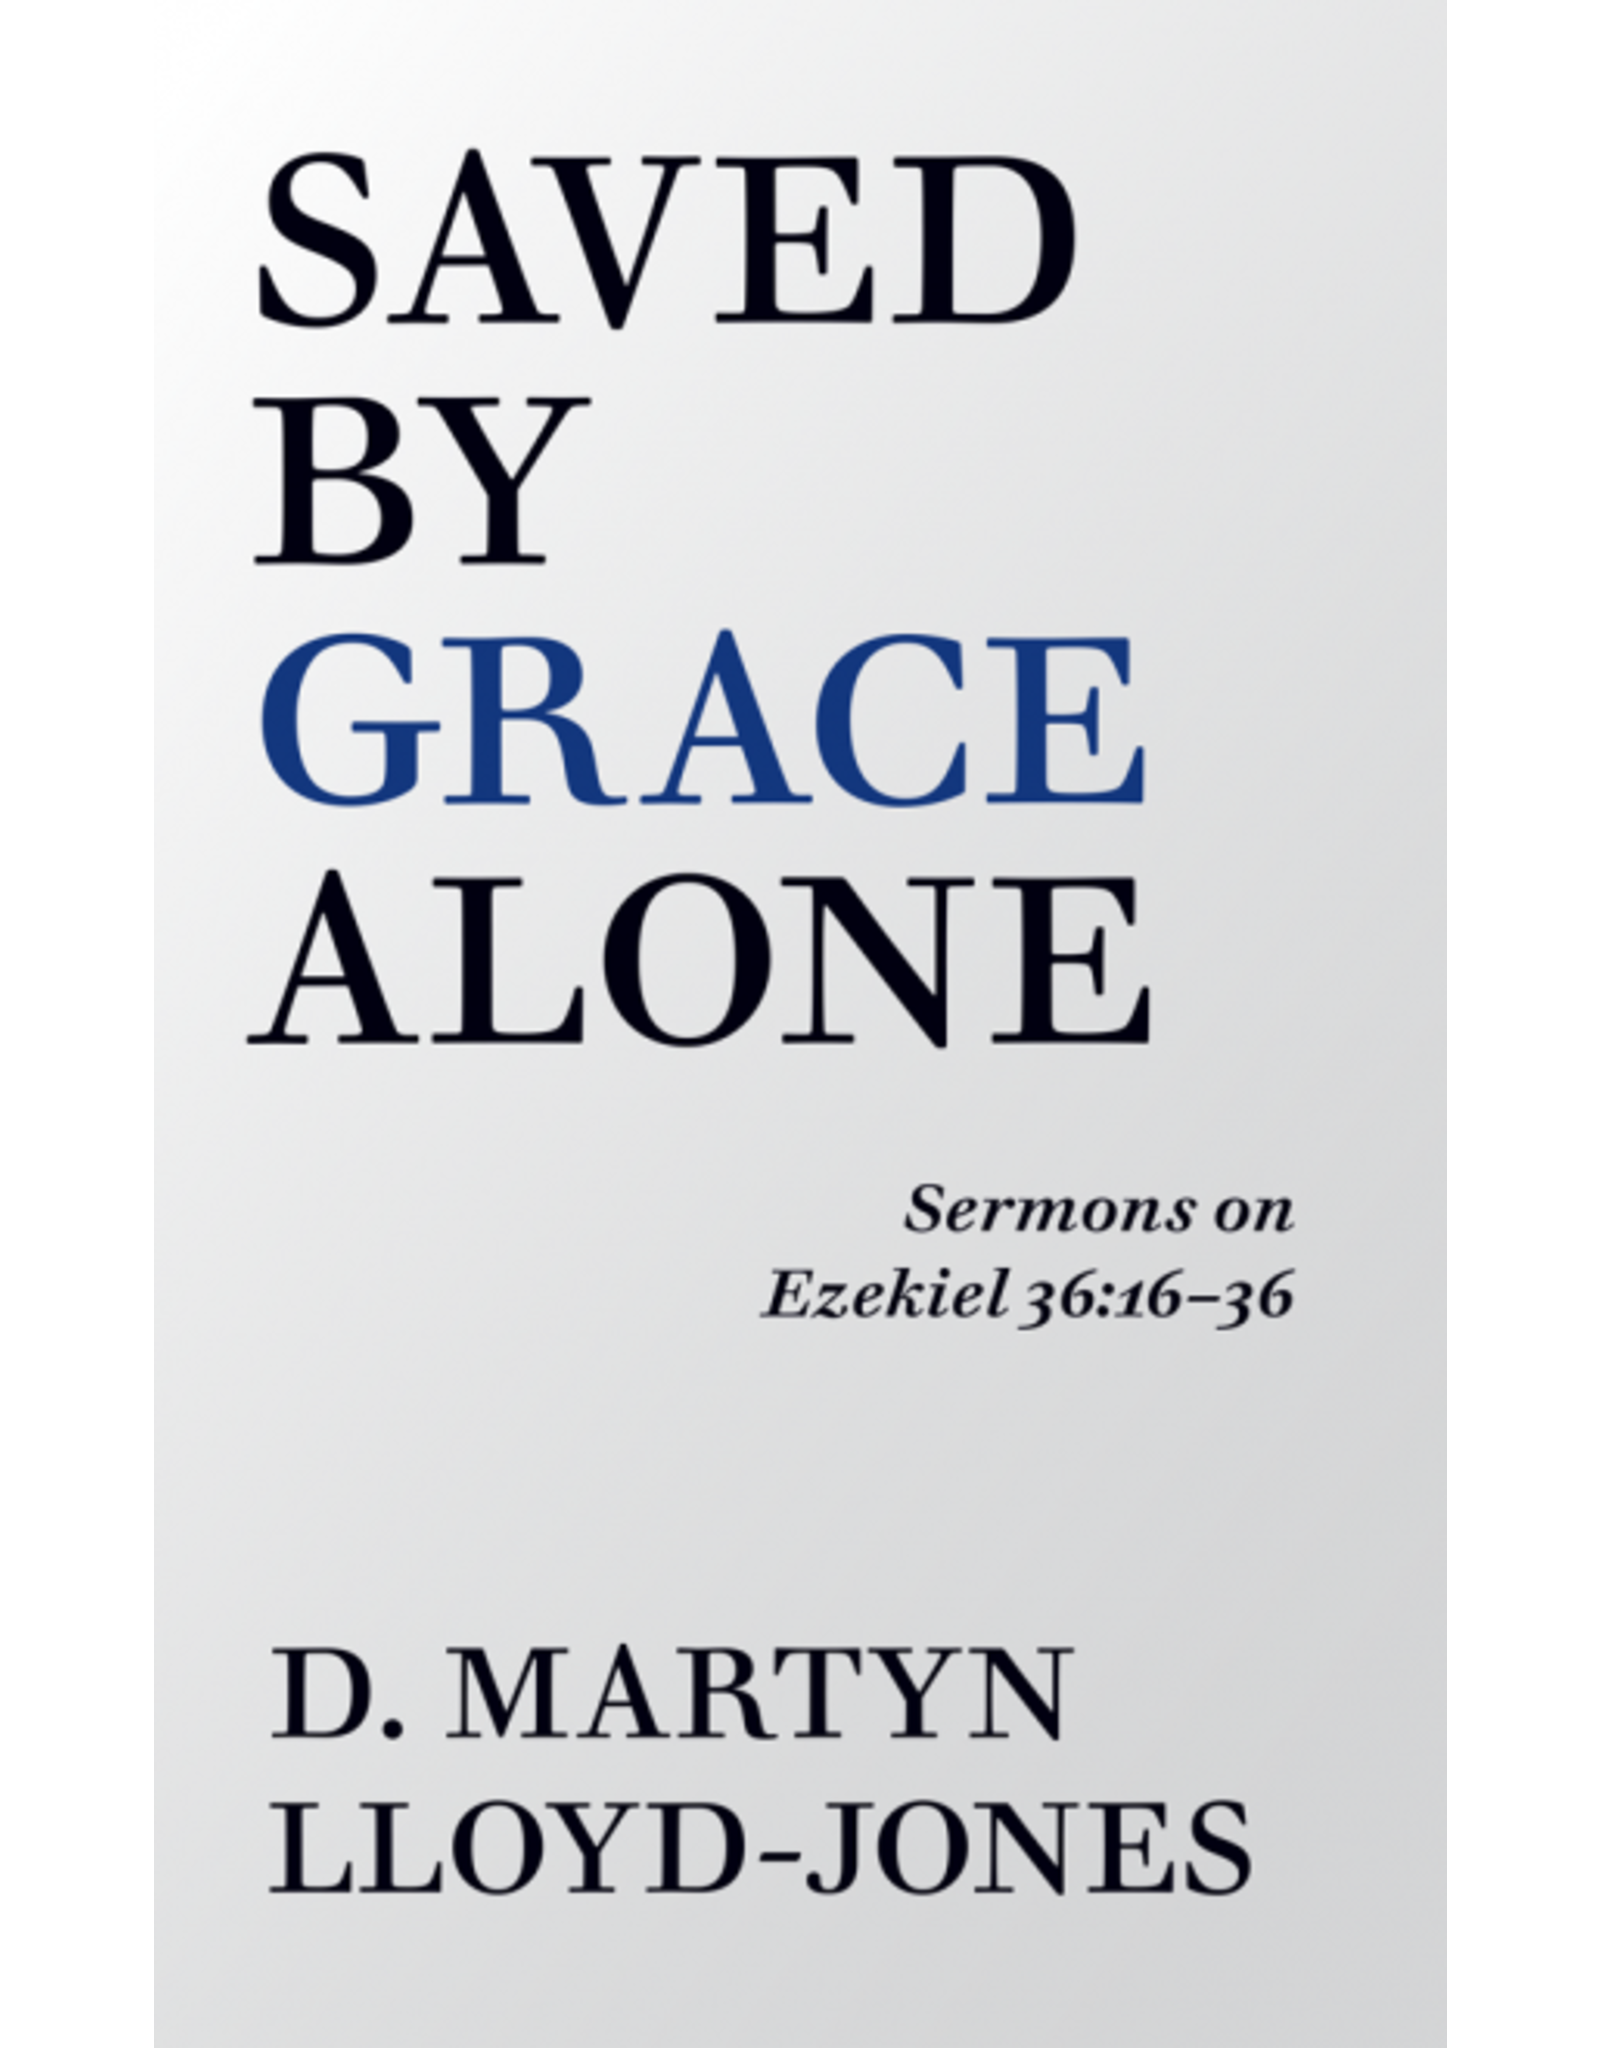 David Martyn Lloyd-Jones Saved By Grace Alone